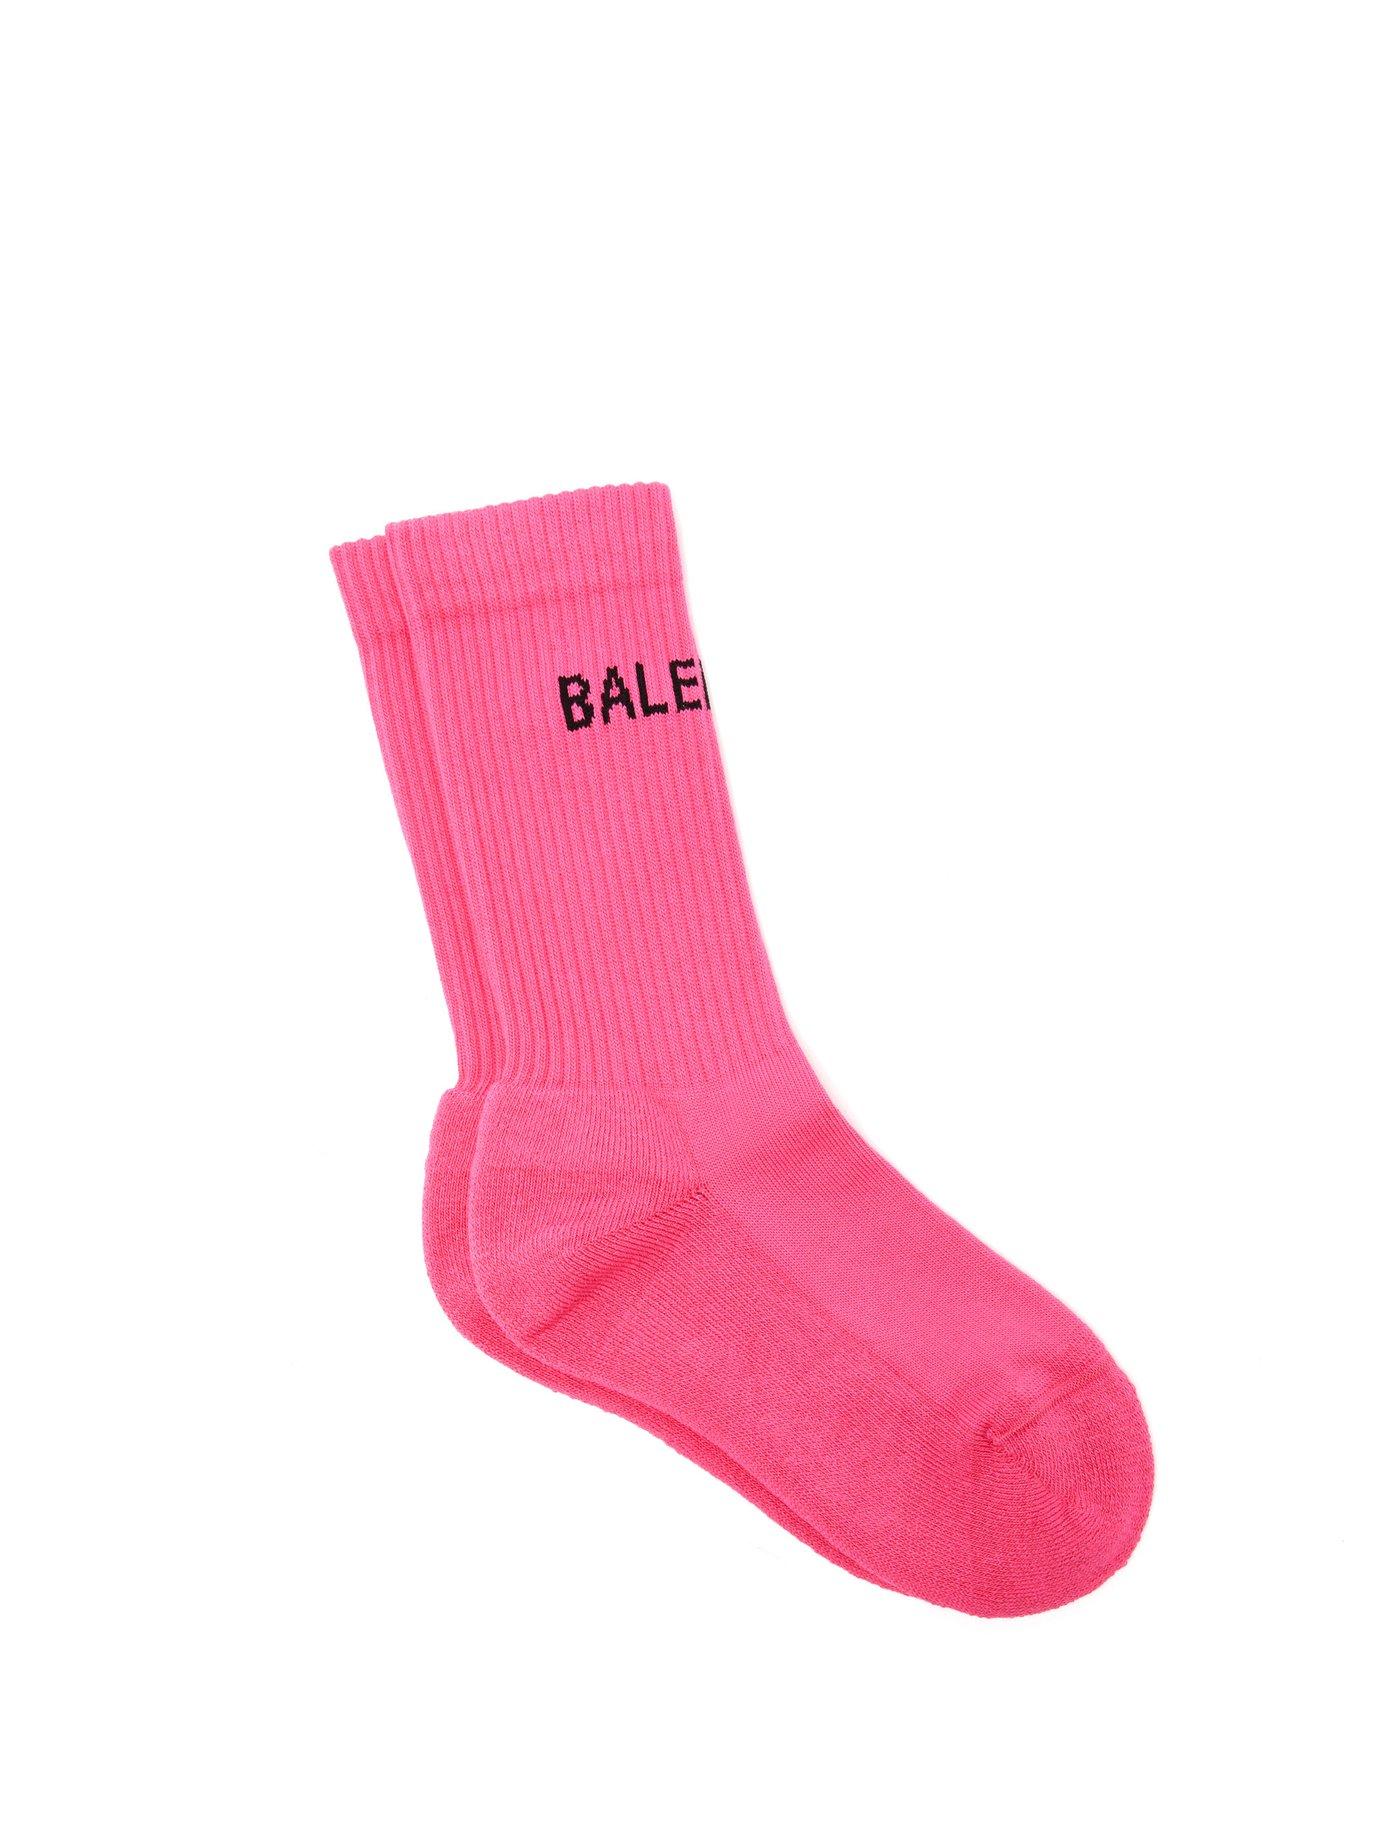 balenciaga socks pink